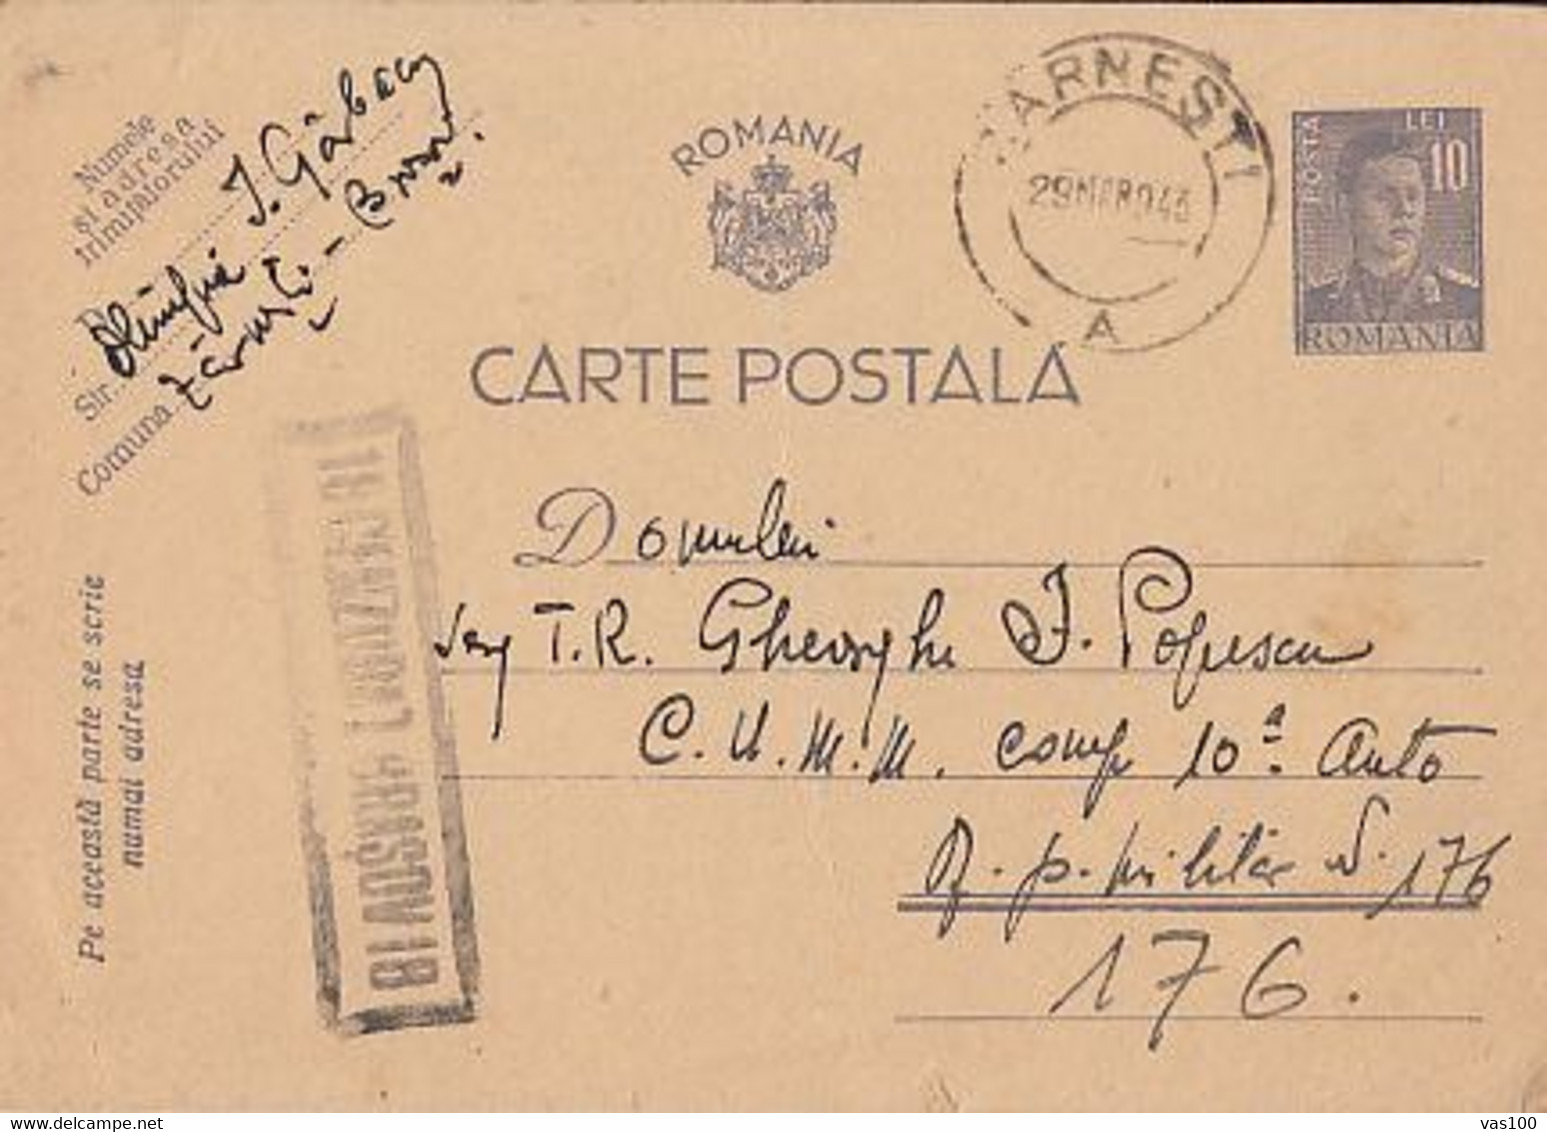 WW2 LETTERS, CENSORED BRASOV NR 18, KING MICHAEL PC STATIONERY, ENTIER POSTAL, 1943, ROMANIA - Cartas De La Segunda Guerra Mundial